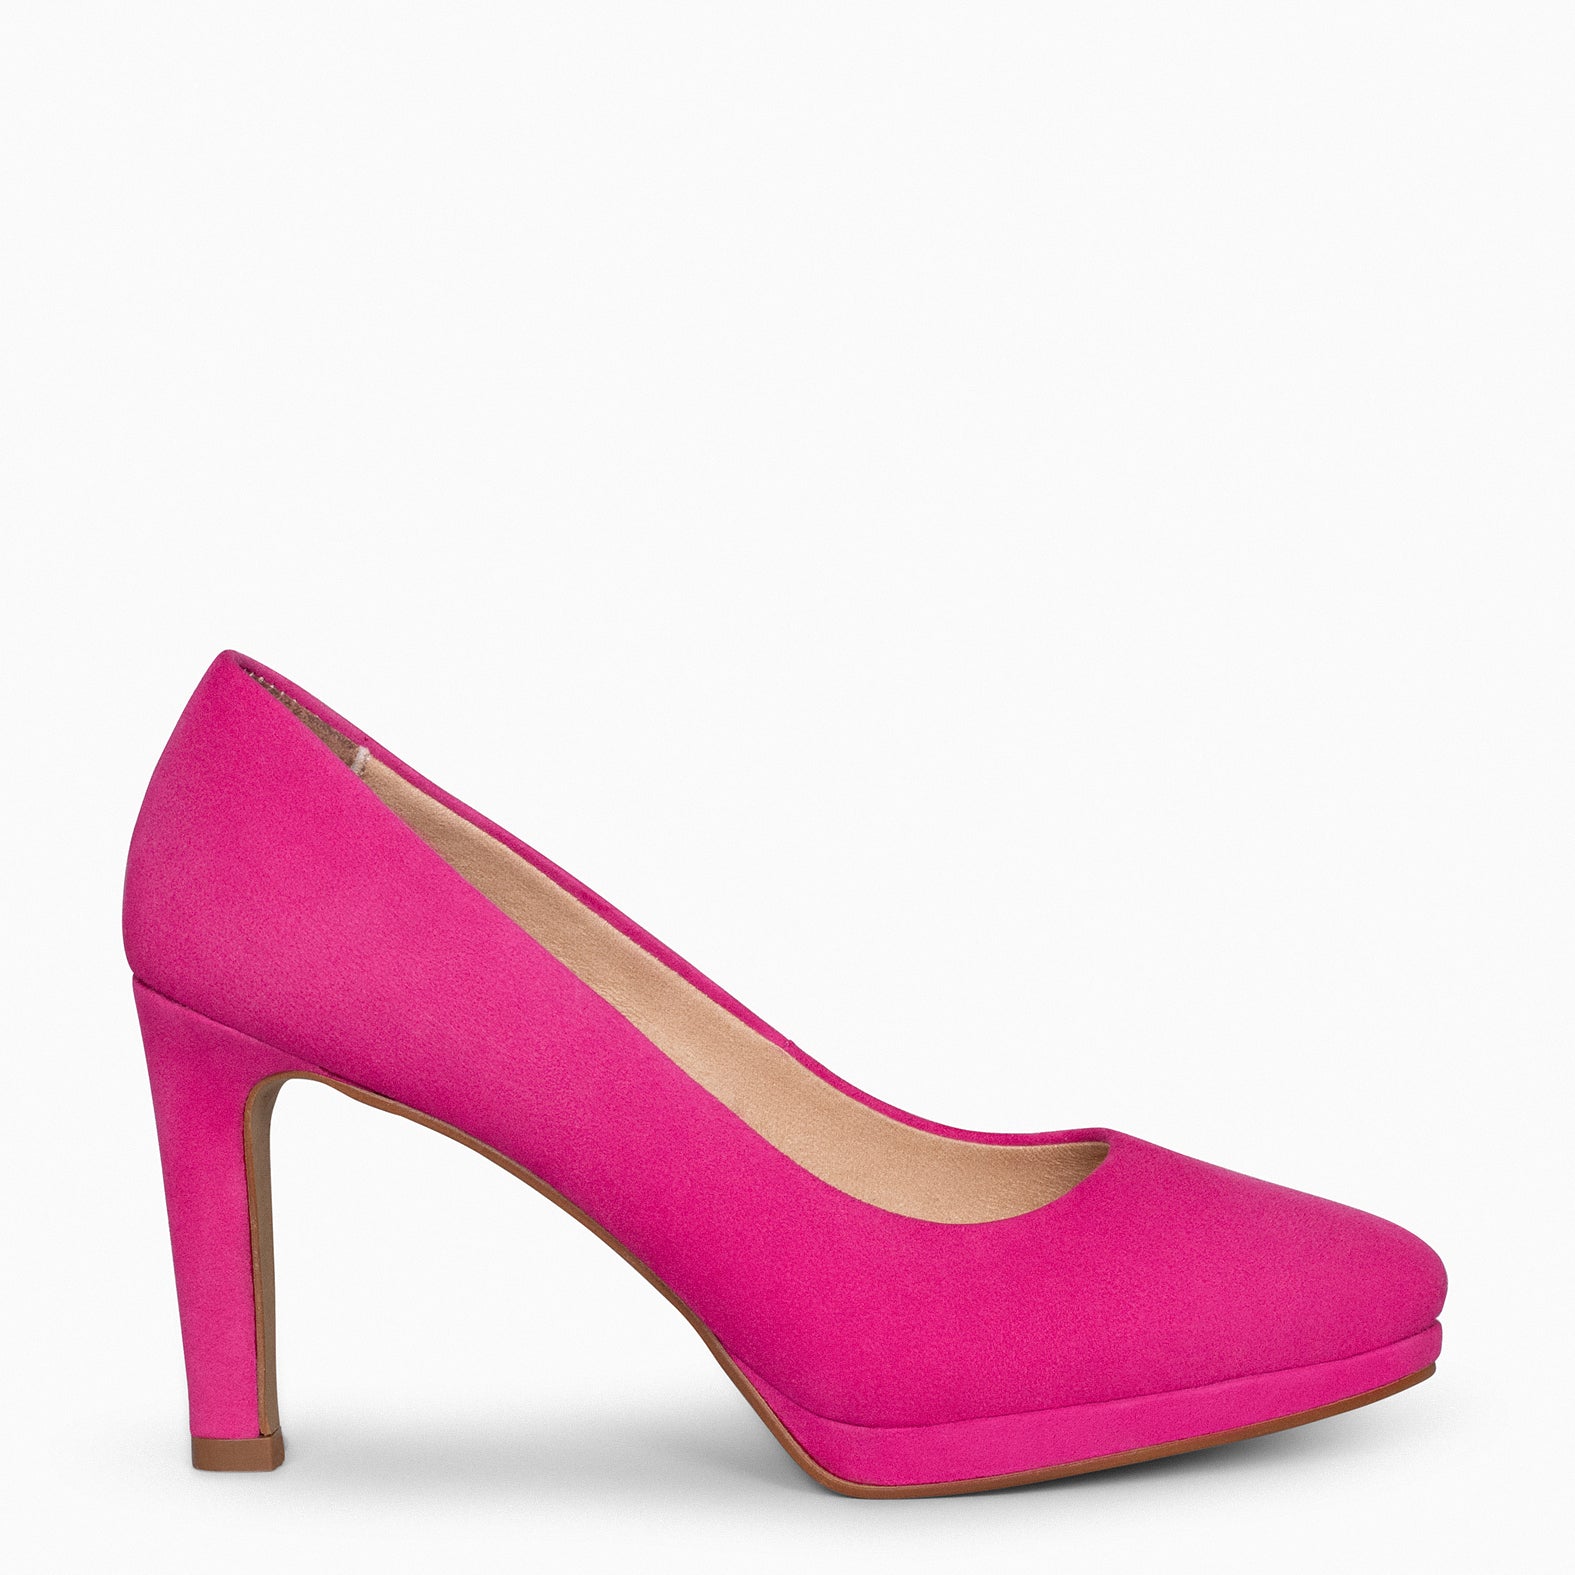 PLATFORM – FUCHSIA high heels with platform